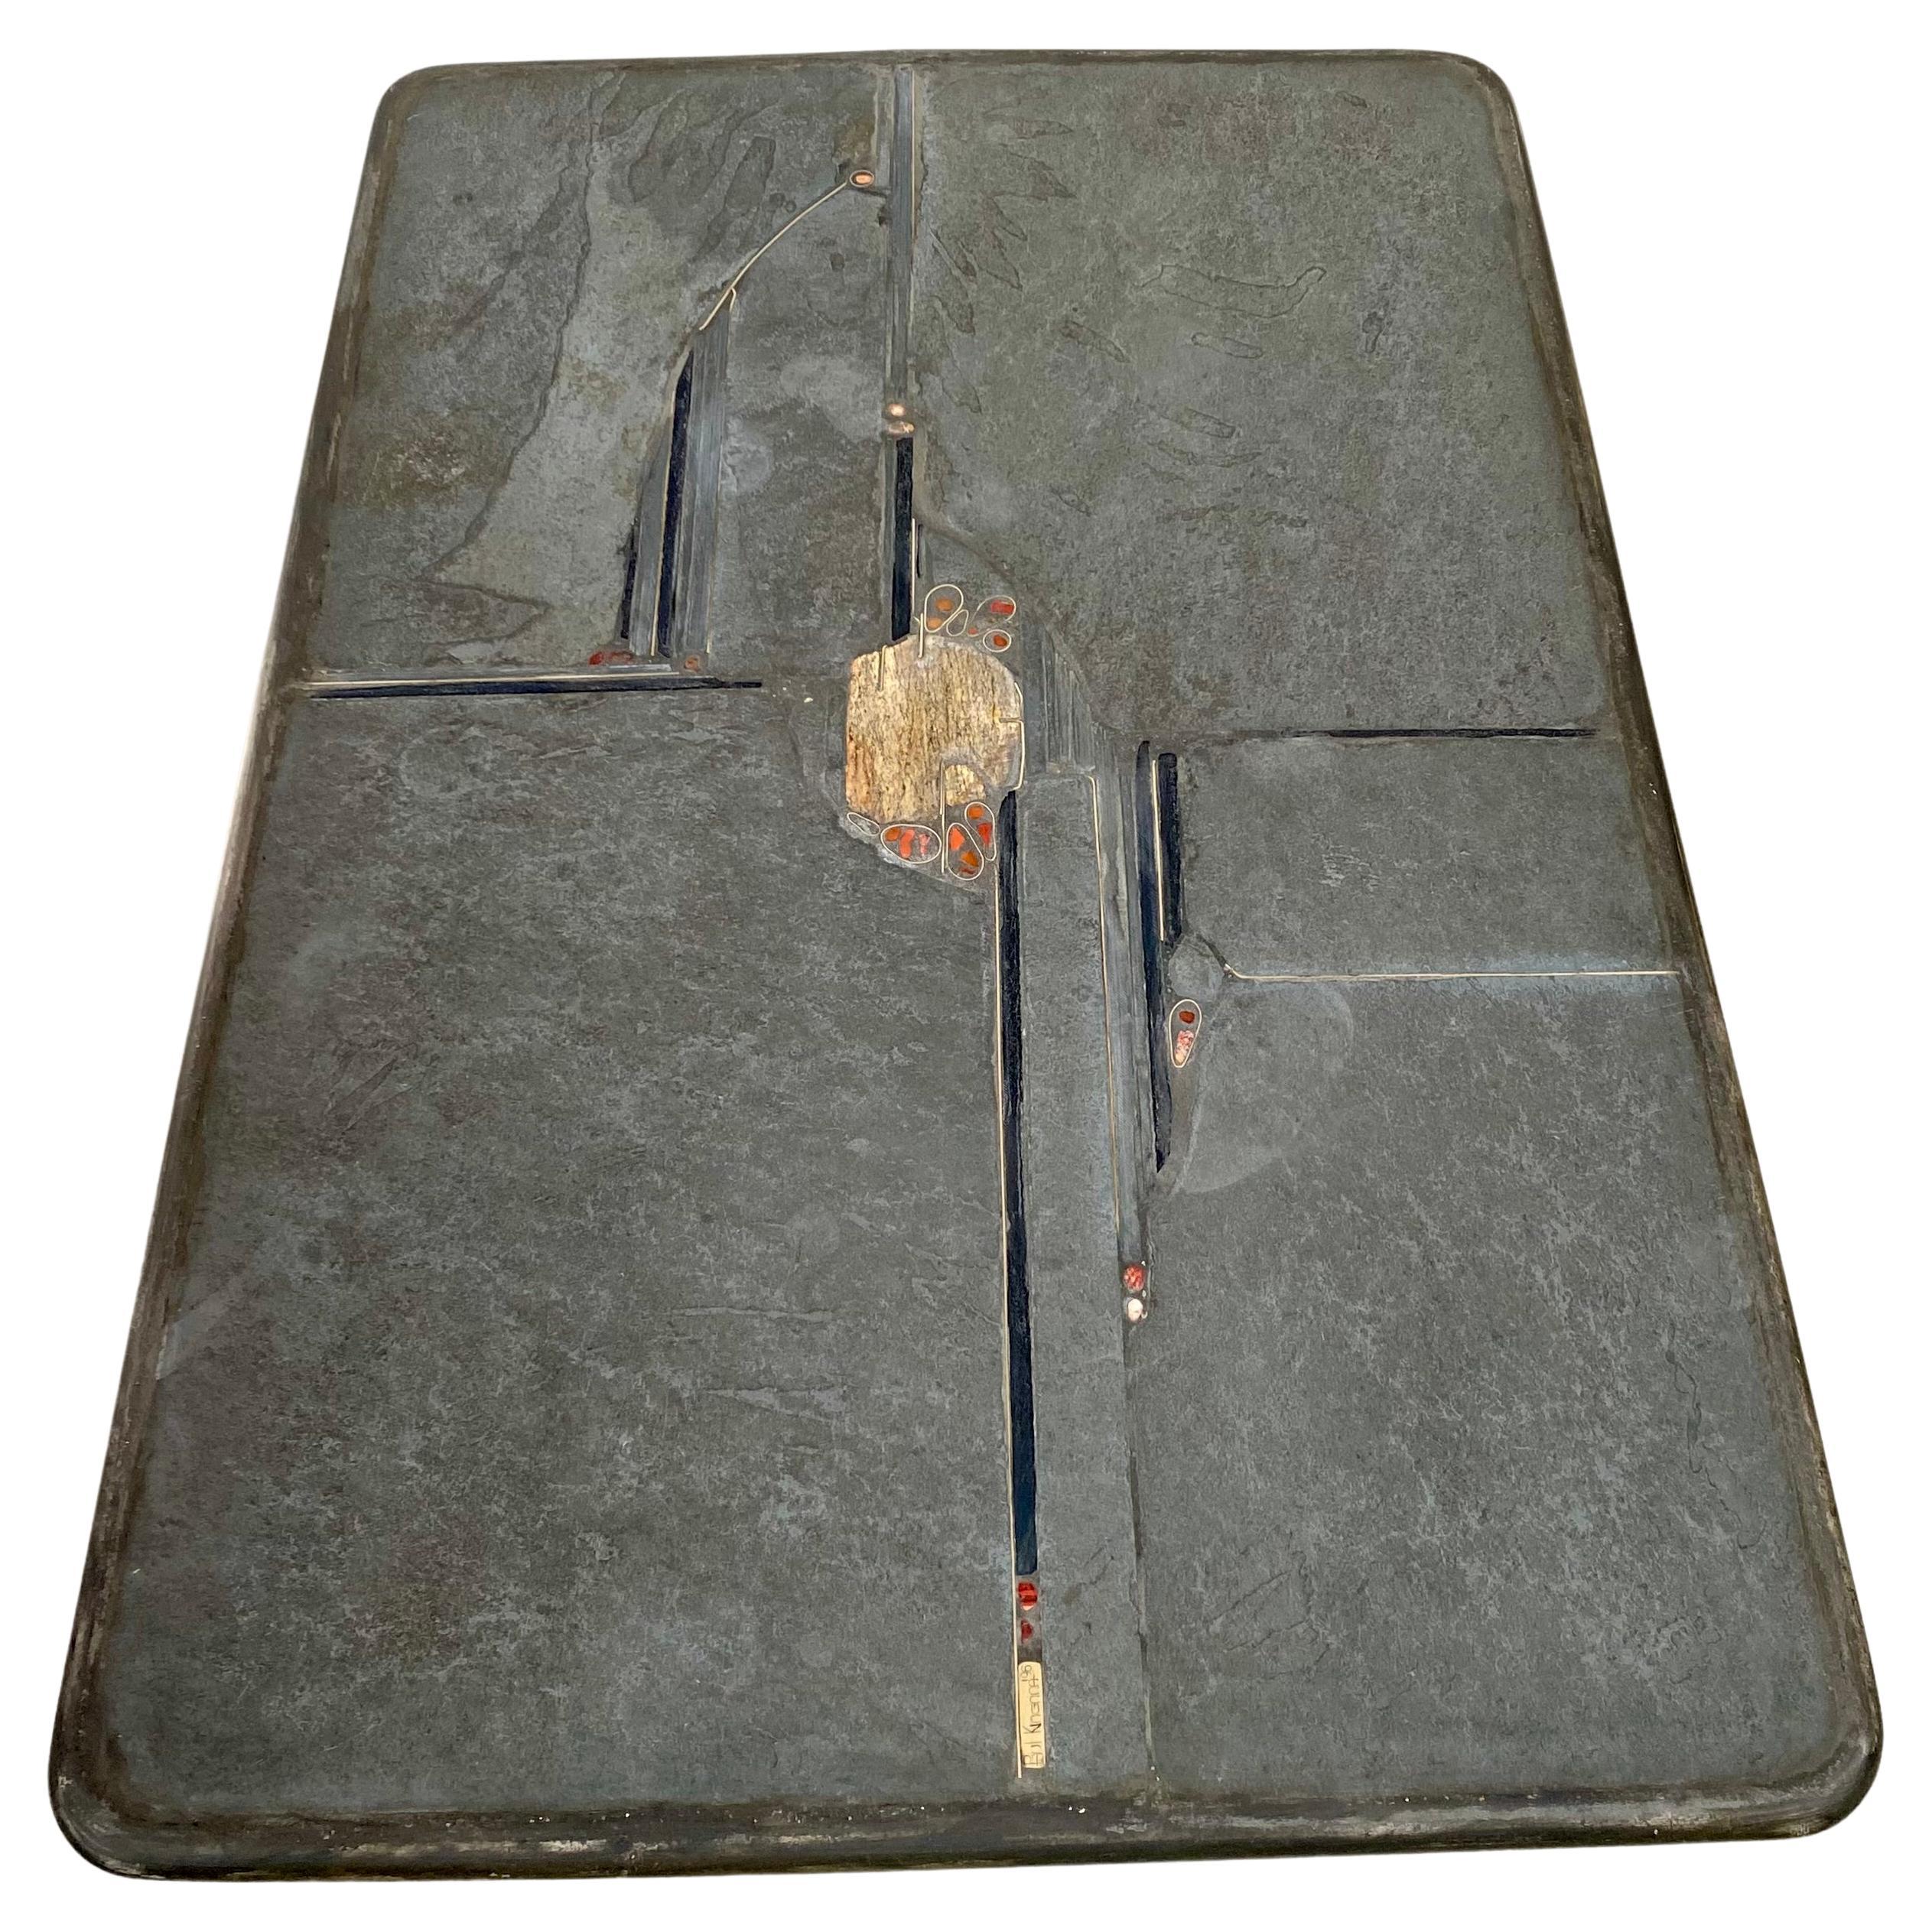 Brutalist Rectangular Slate Stone Coffee Table by Sculpter Paul Kingma 1996 For Sale